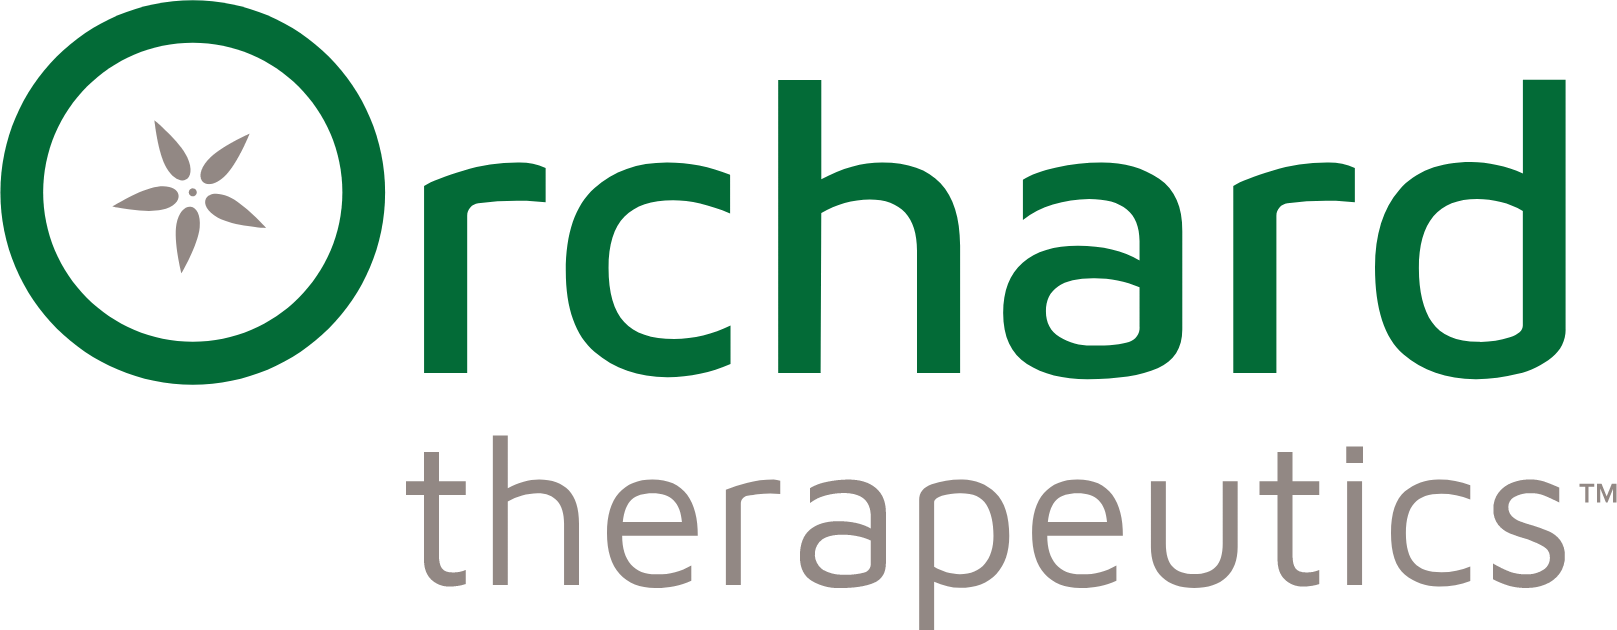 Orchard Therapeutics
 logo large (transparent PNG)